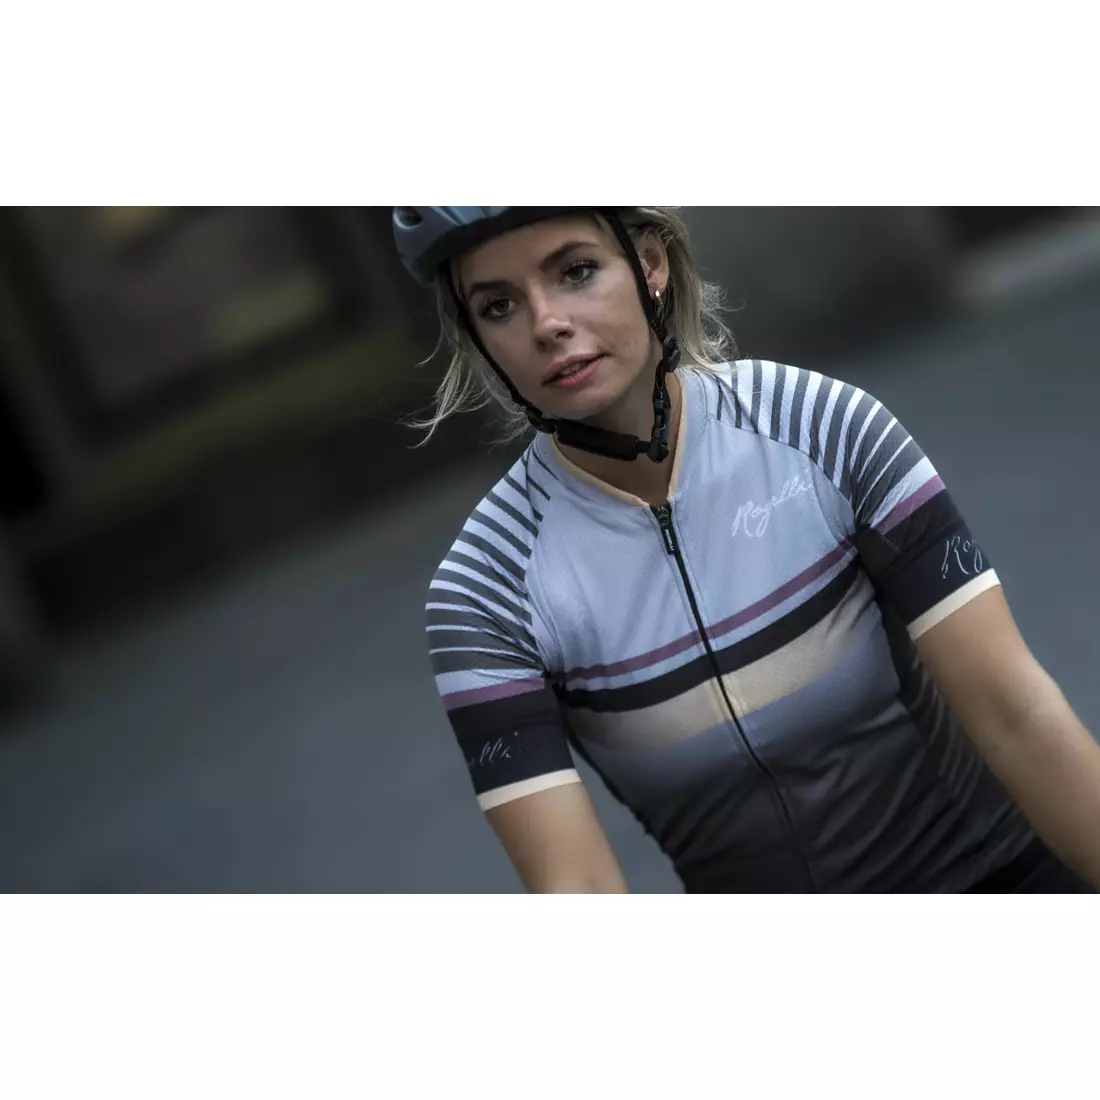 Rogelli Impress 010.162 Women Bicycle t-shirt Grey/Gold